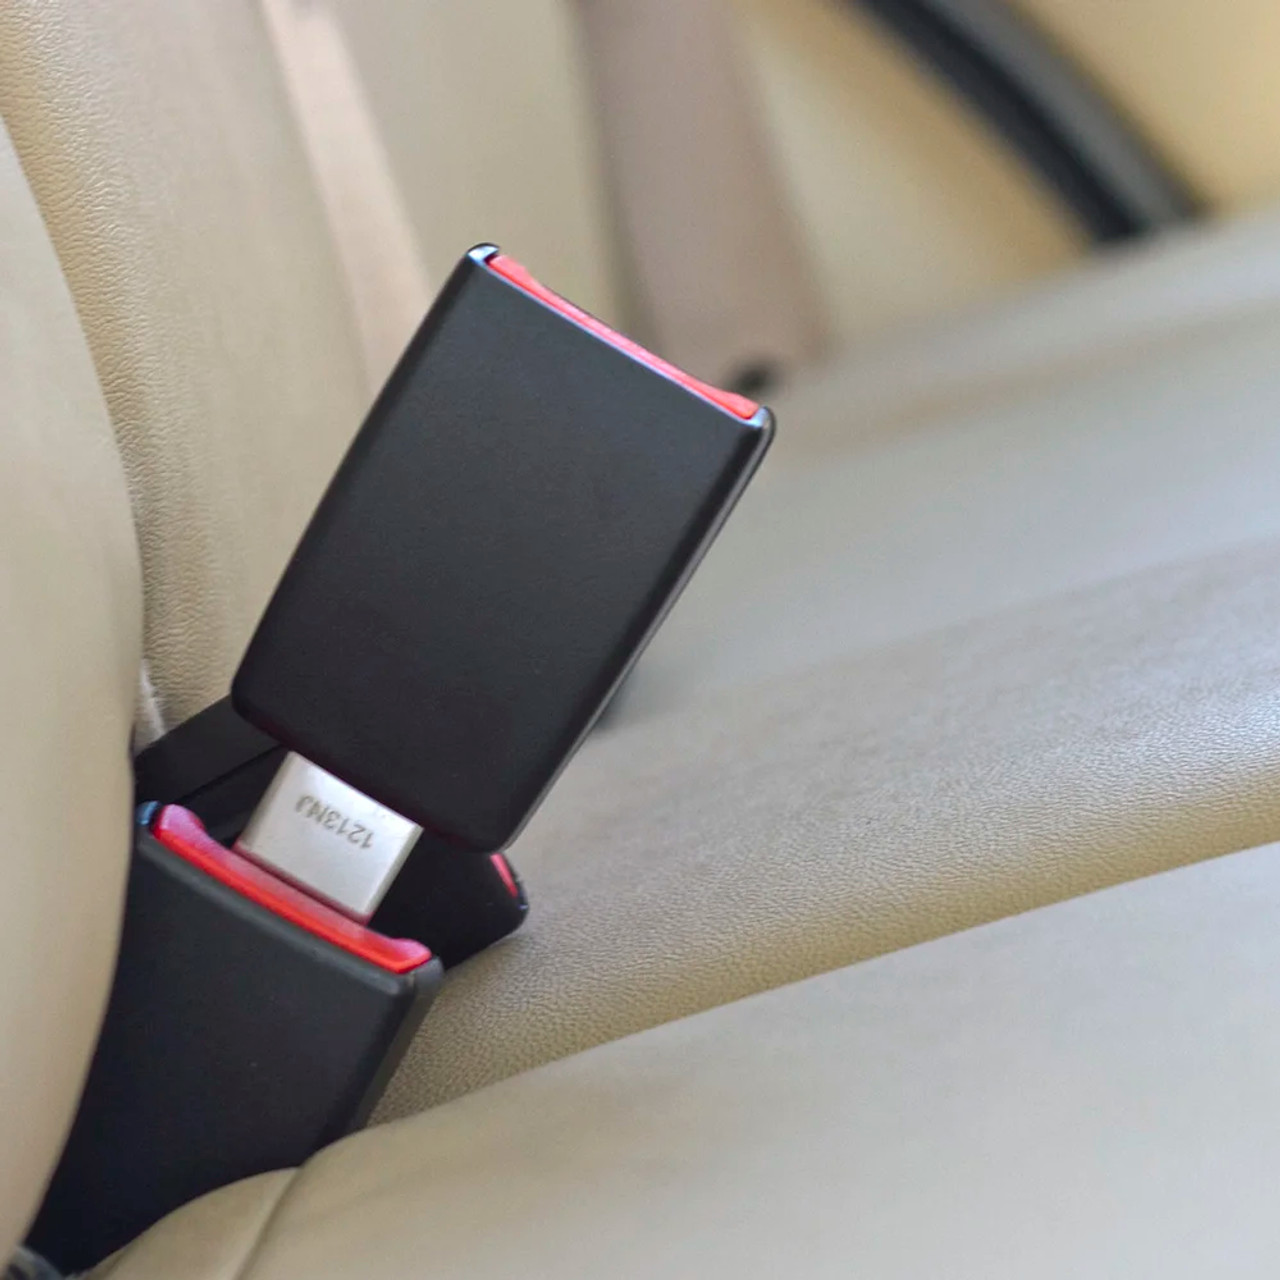 Seat Belt 1 Foot Extension for 3-pt. Seatbelts